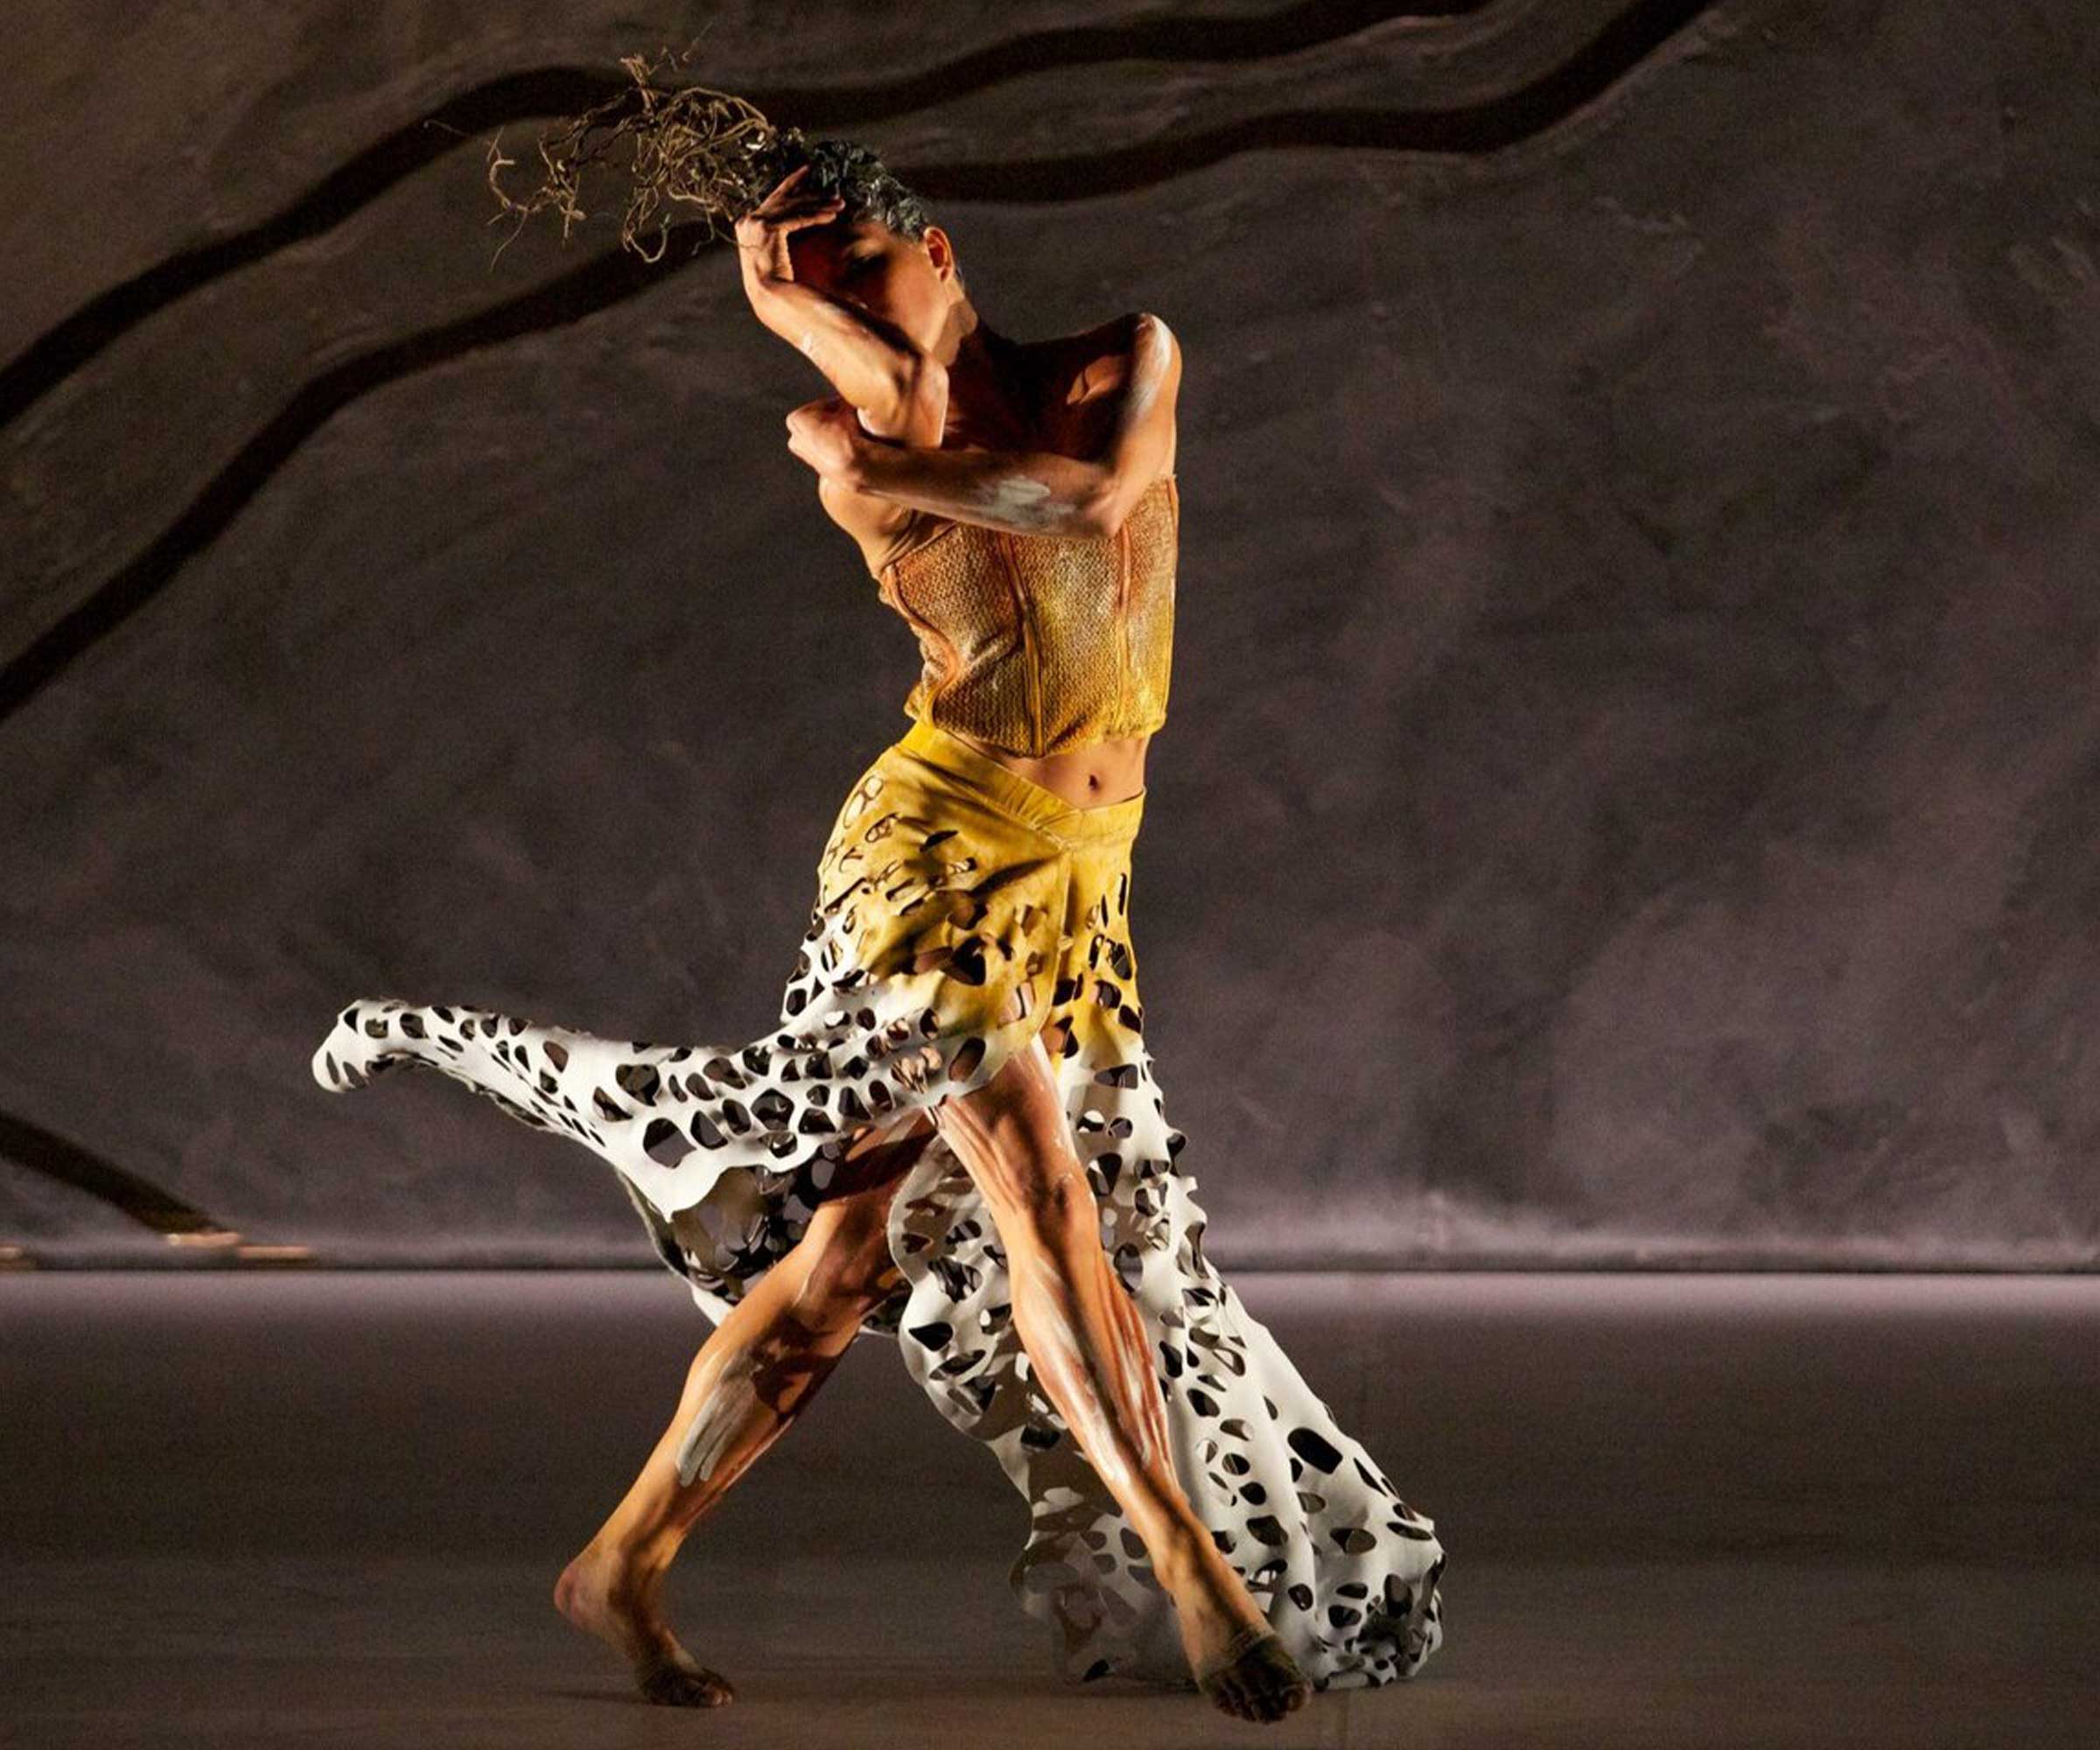 Ella Havelka dances in the Frances Rings-choreographed work 'Terrain'. © Greg Barrett